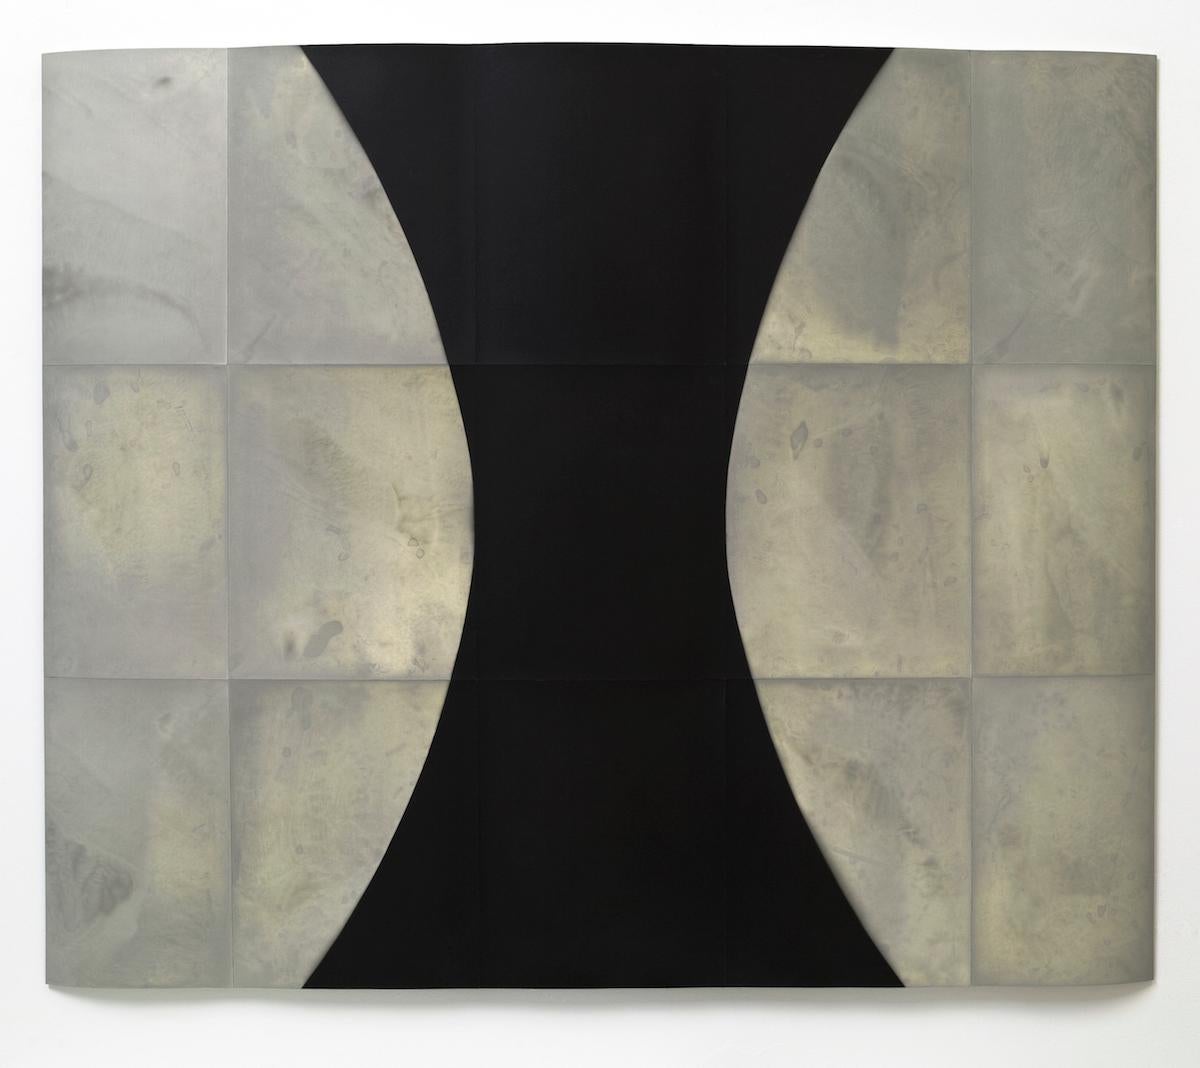 Nikolai Ishchuk Abstract Sculpture - Threshold (16): A Black & White Experimental Photogram on Silver Gelatin paper